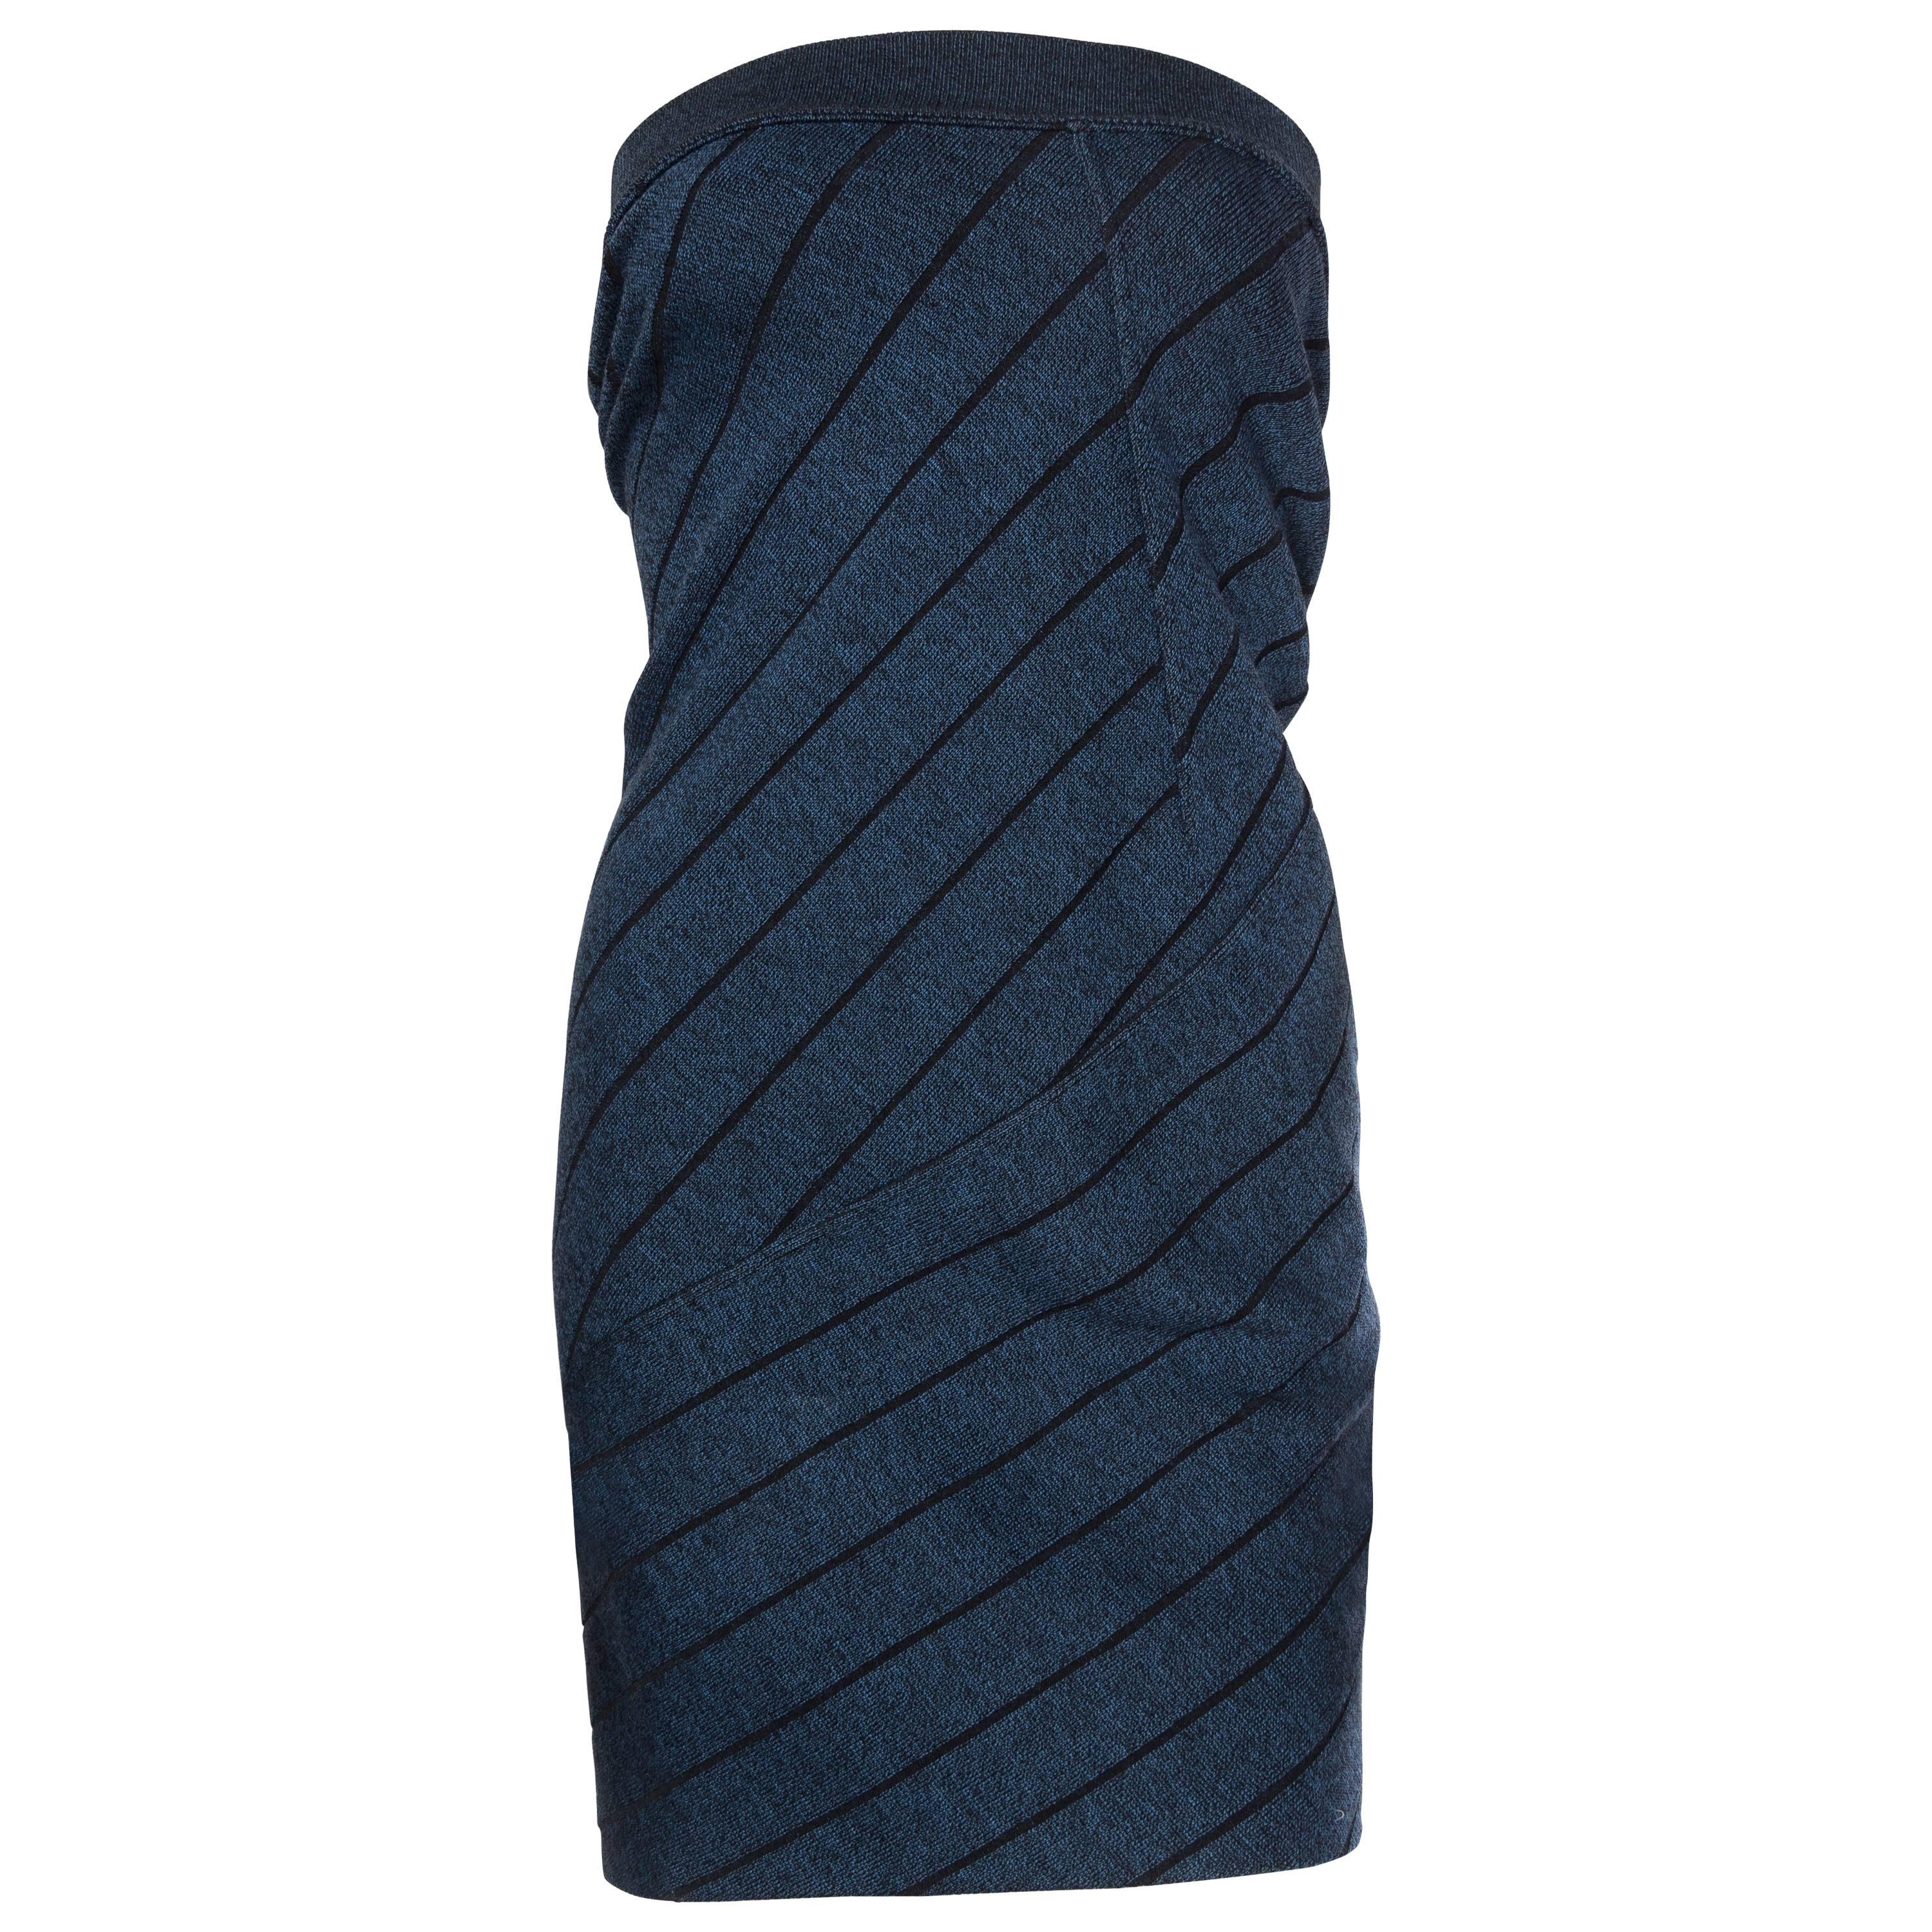 1980S AZZEDINE ALAIA Blue & Black Rayon Blend Knit High-Waisted Skirt